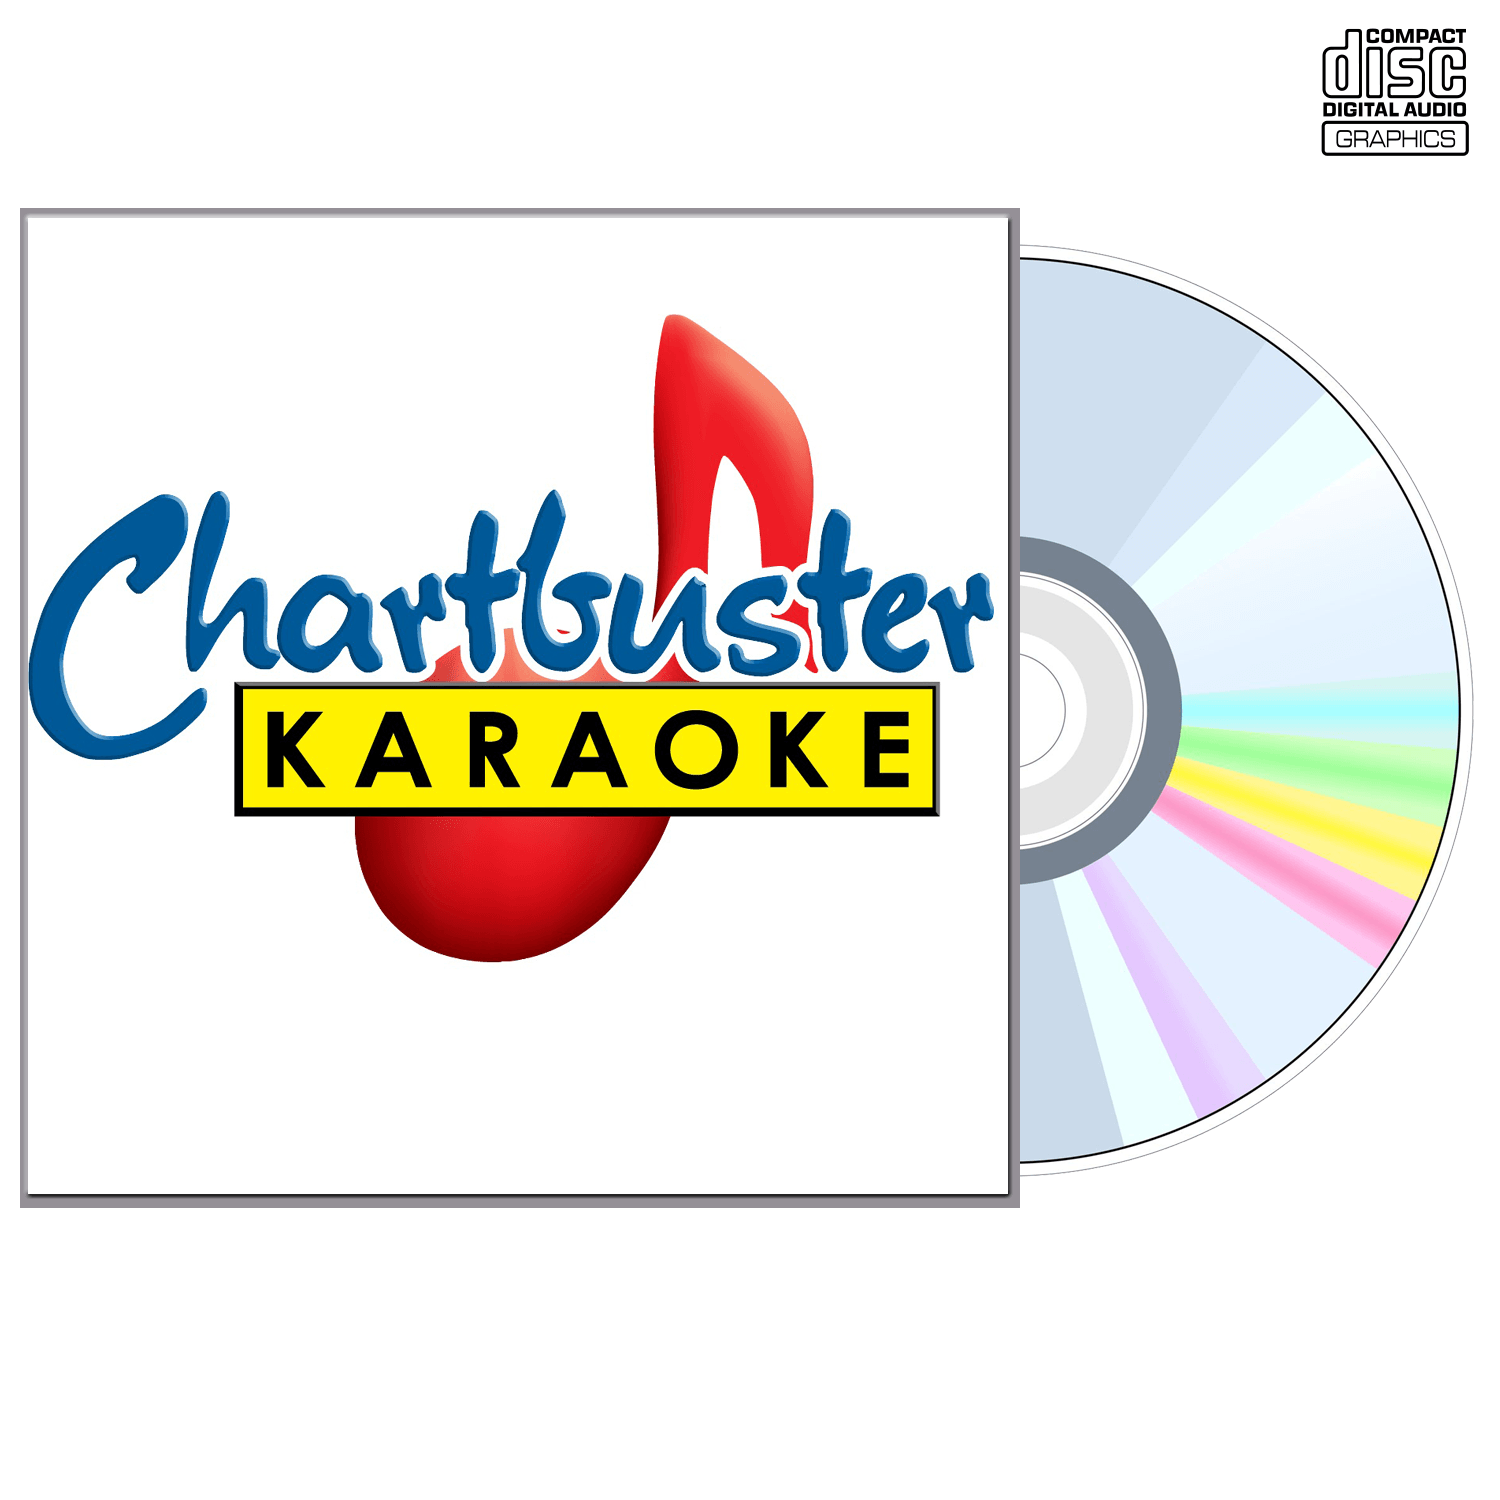 Destiny's Child - CD+G - Chartbuster Karaoke - Karaoke Home Entertainment